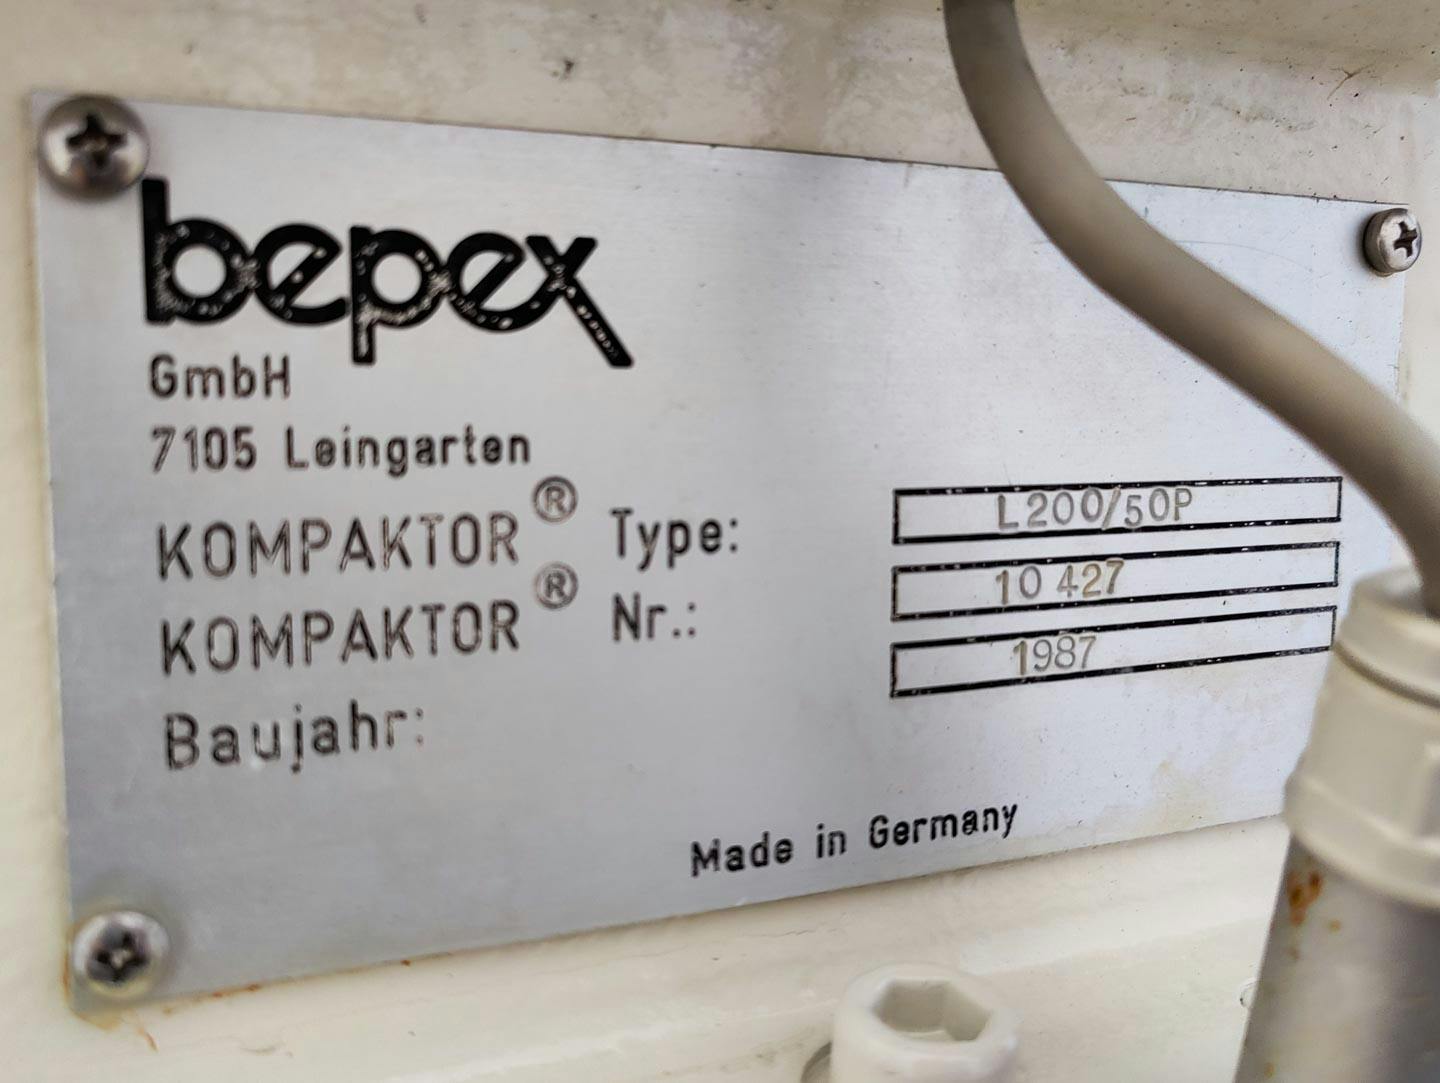 Bepex L-200/50P - Zagęszczarka rolkowa - image 14